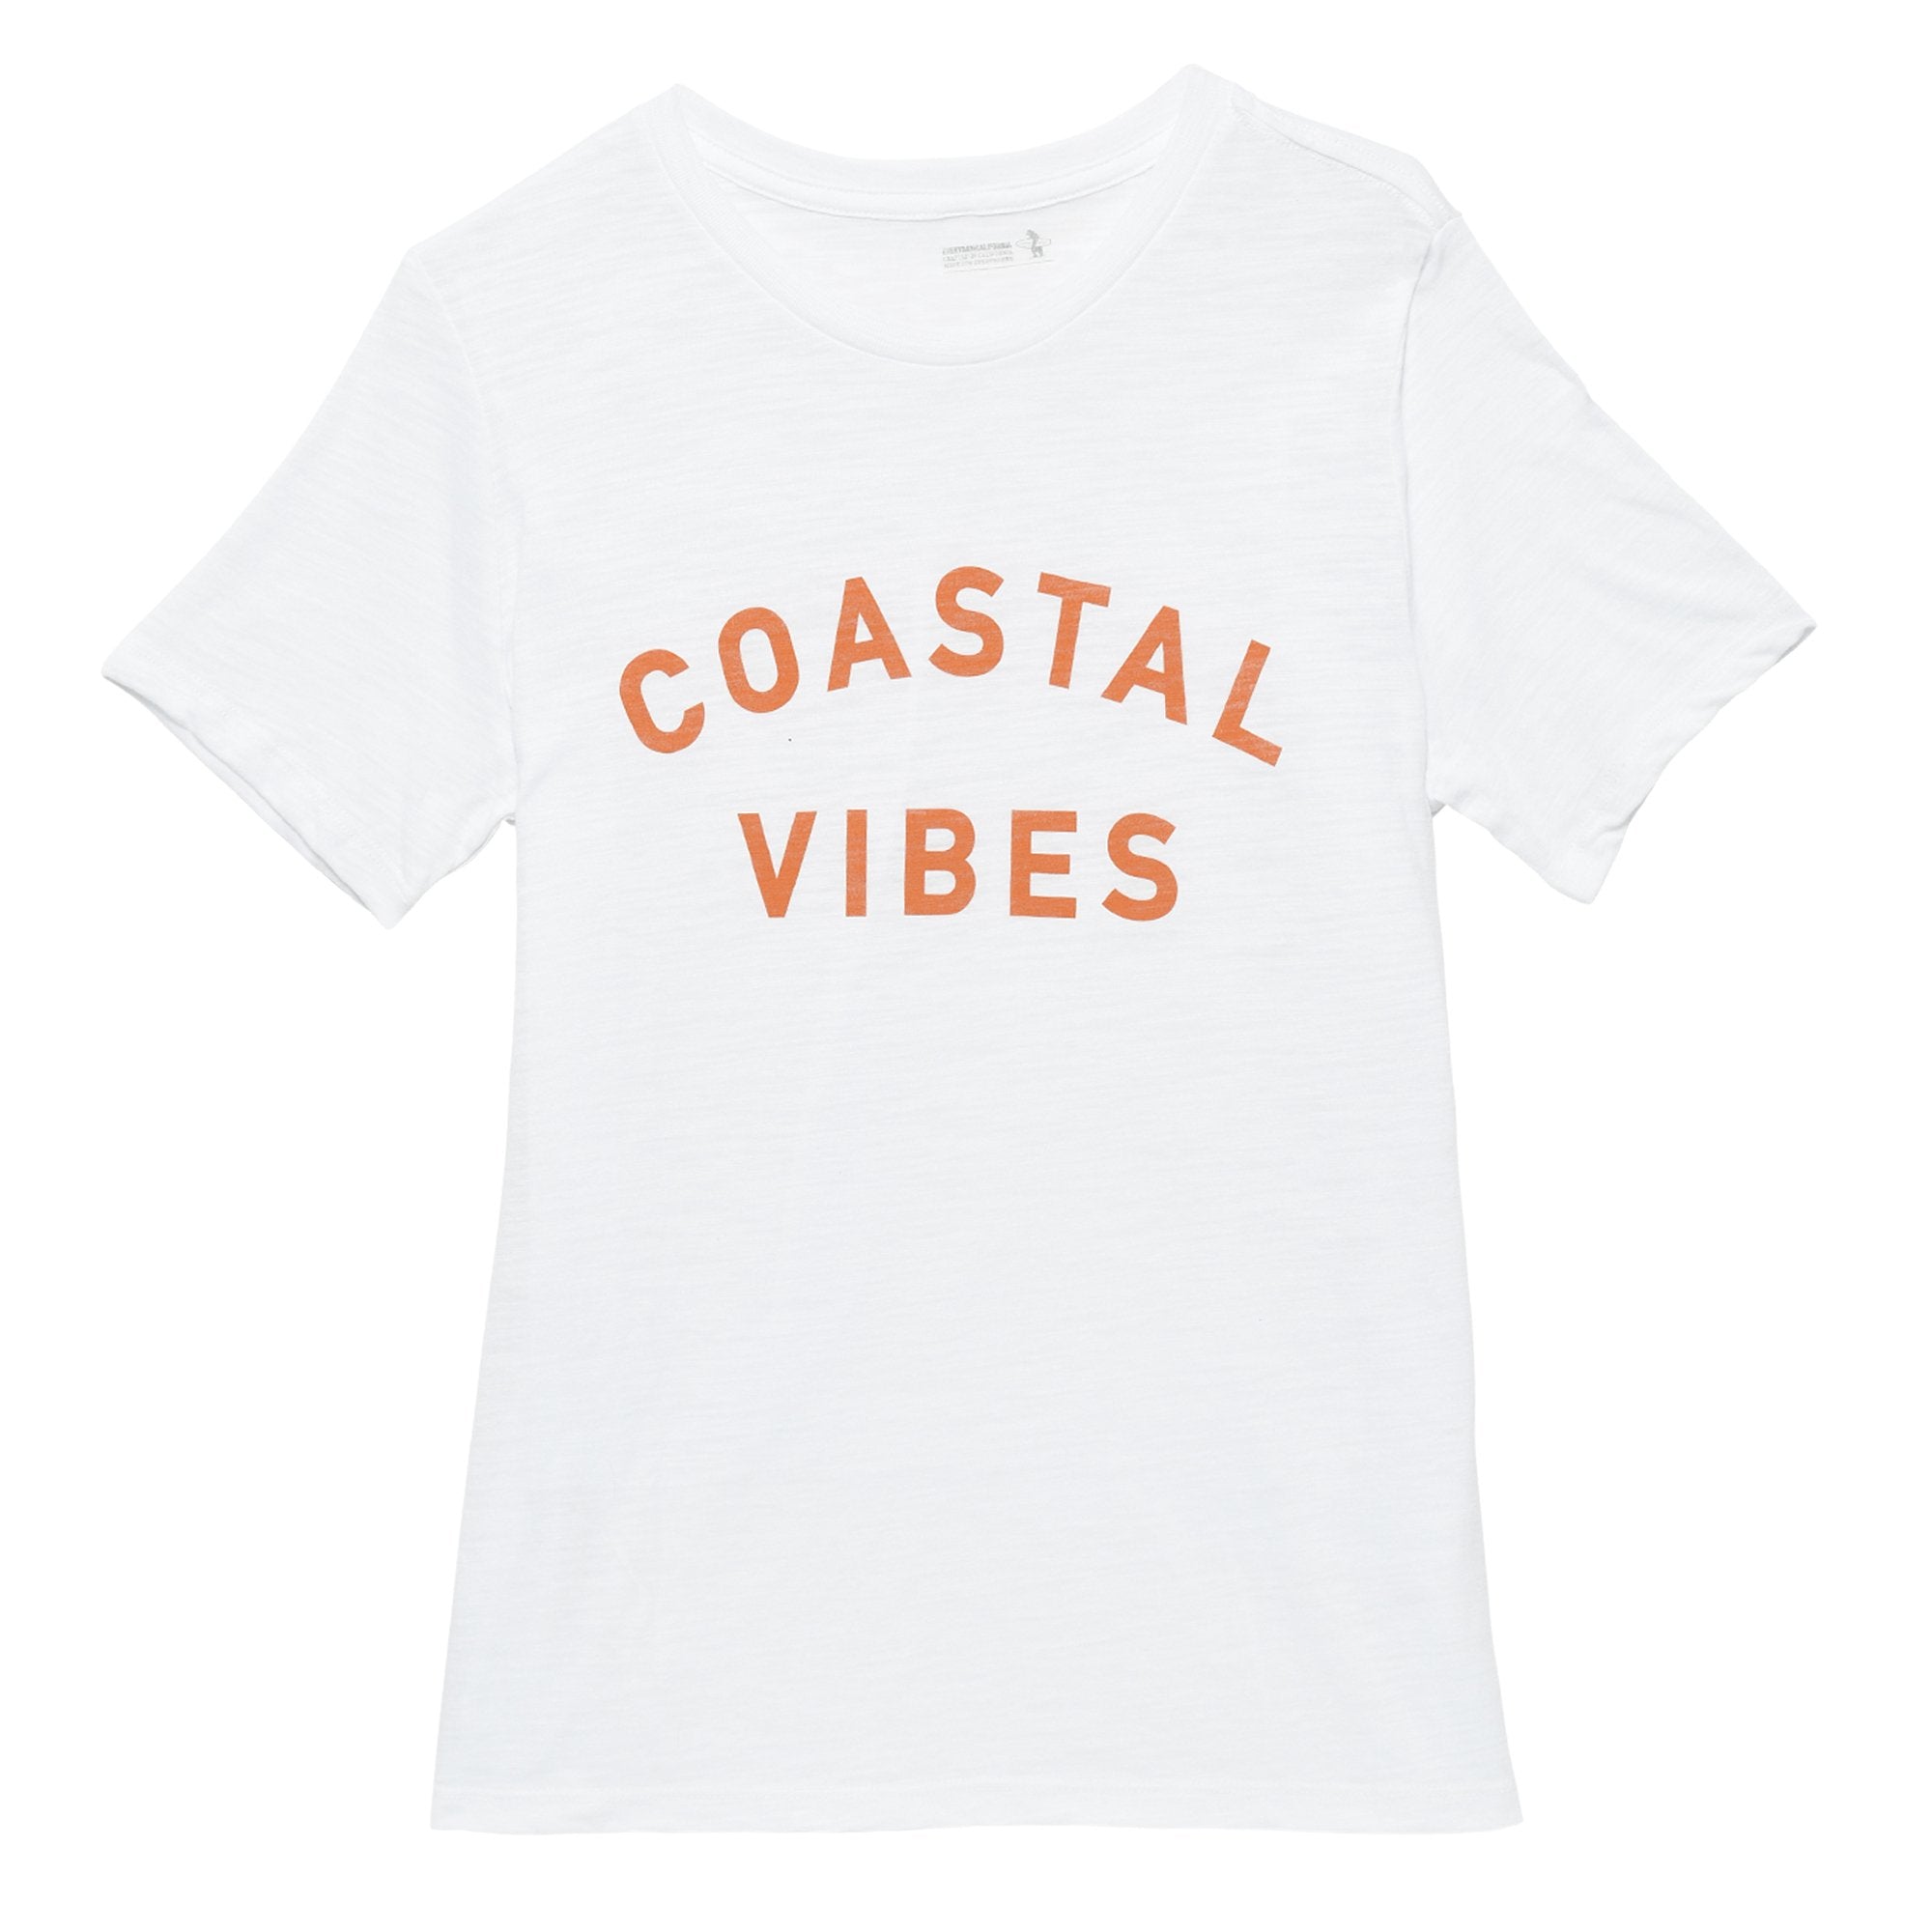 Women's Shirts - Coastal Vibes Tee